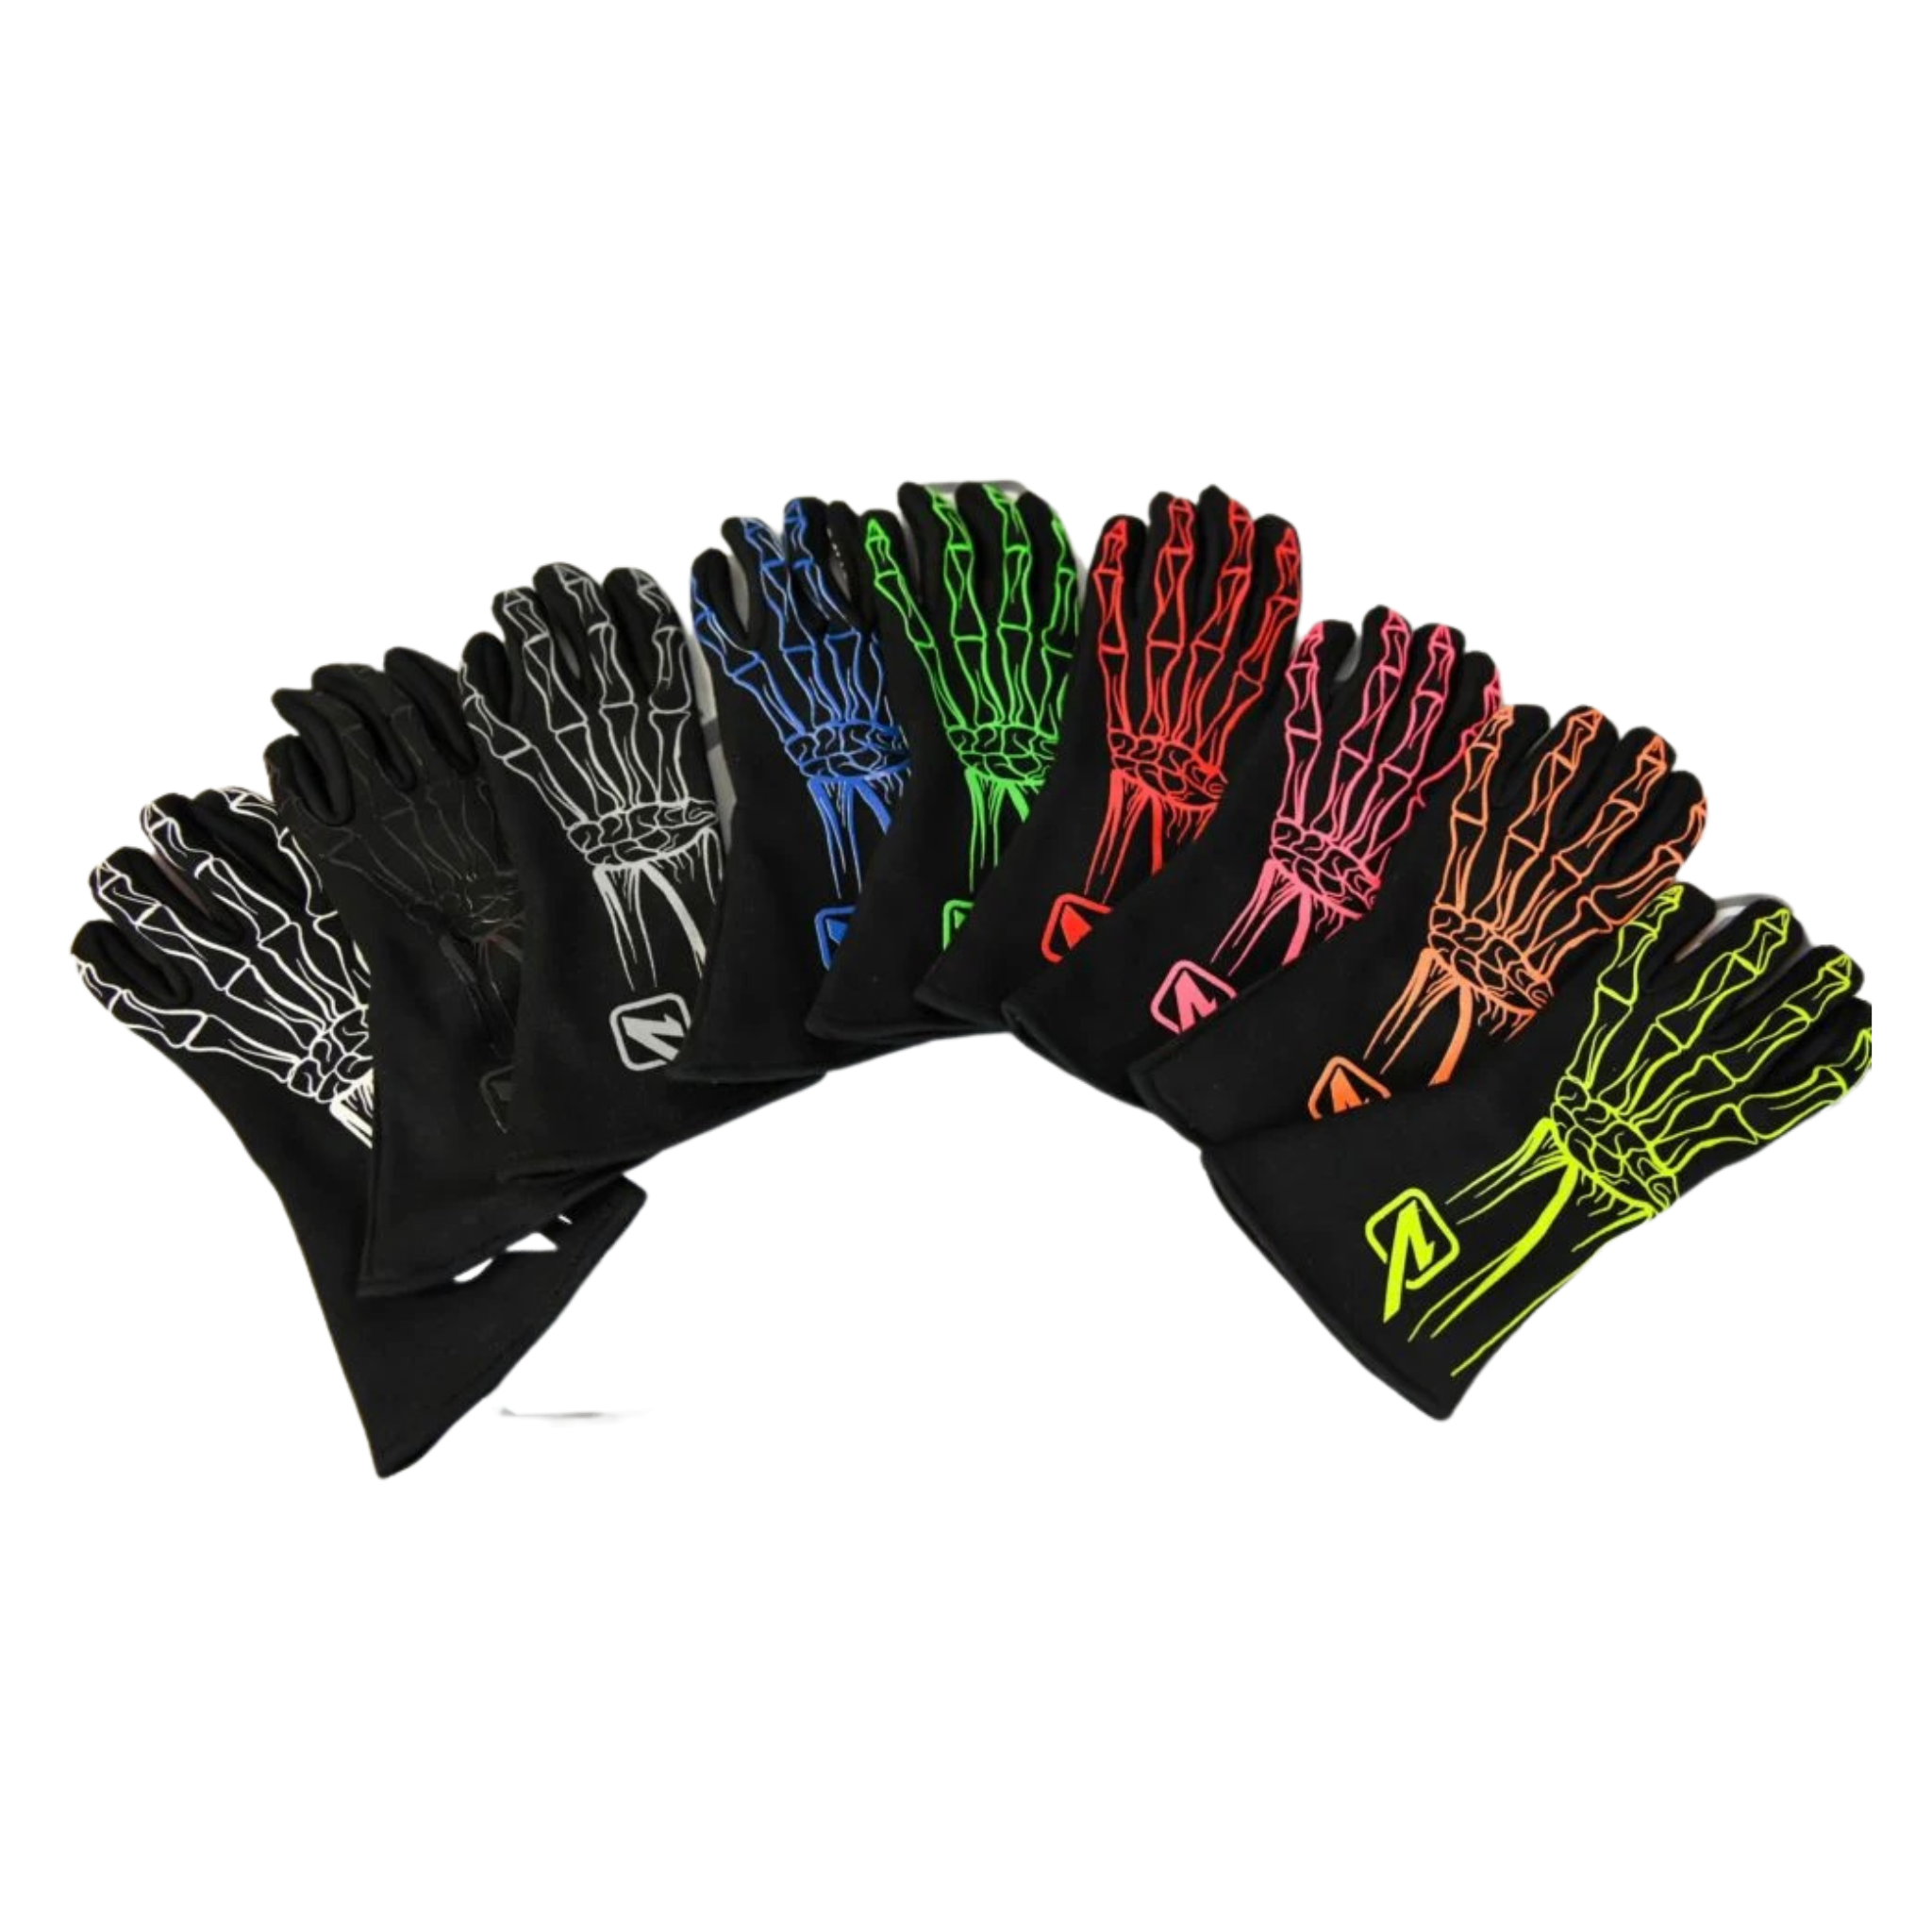 Accessories, Skeleton Football Gloves